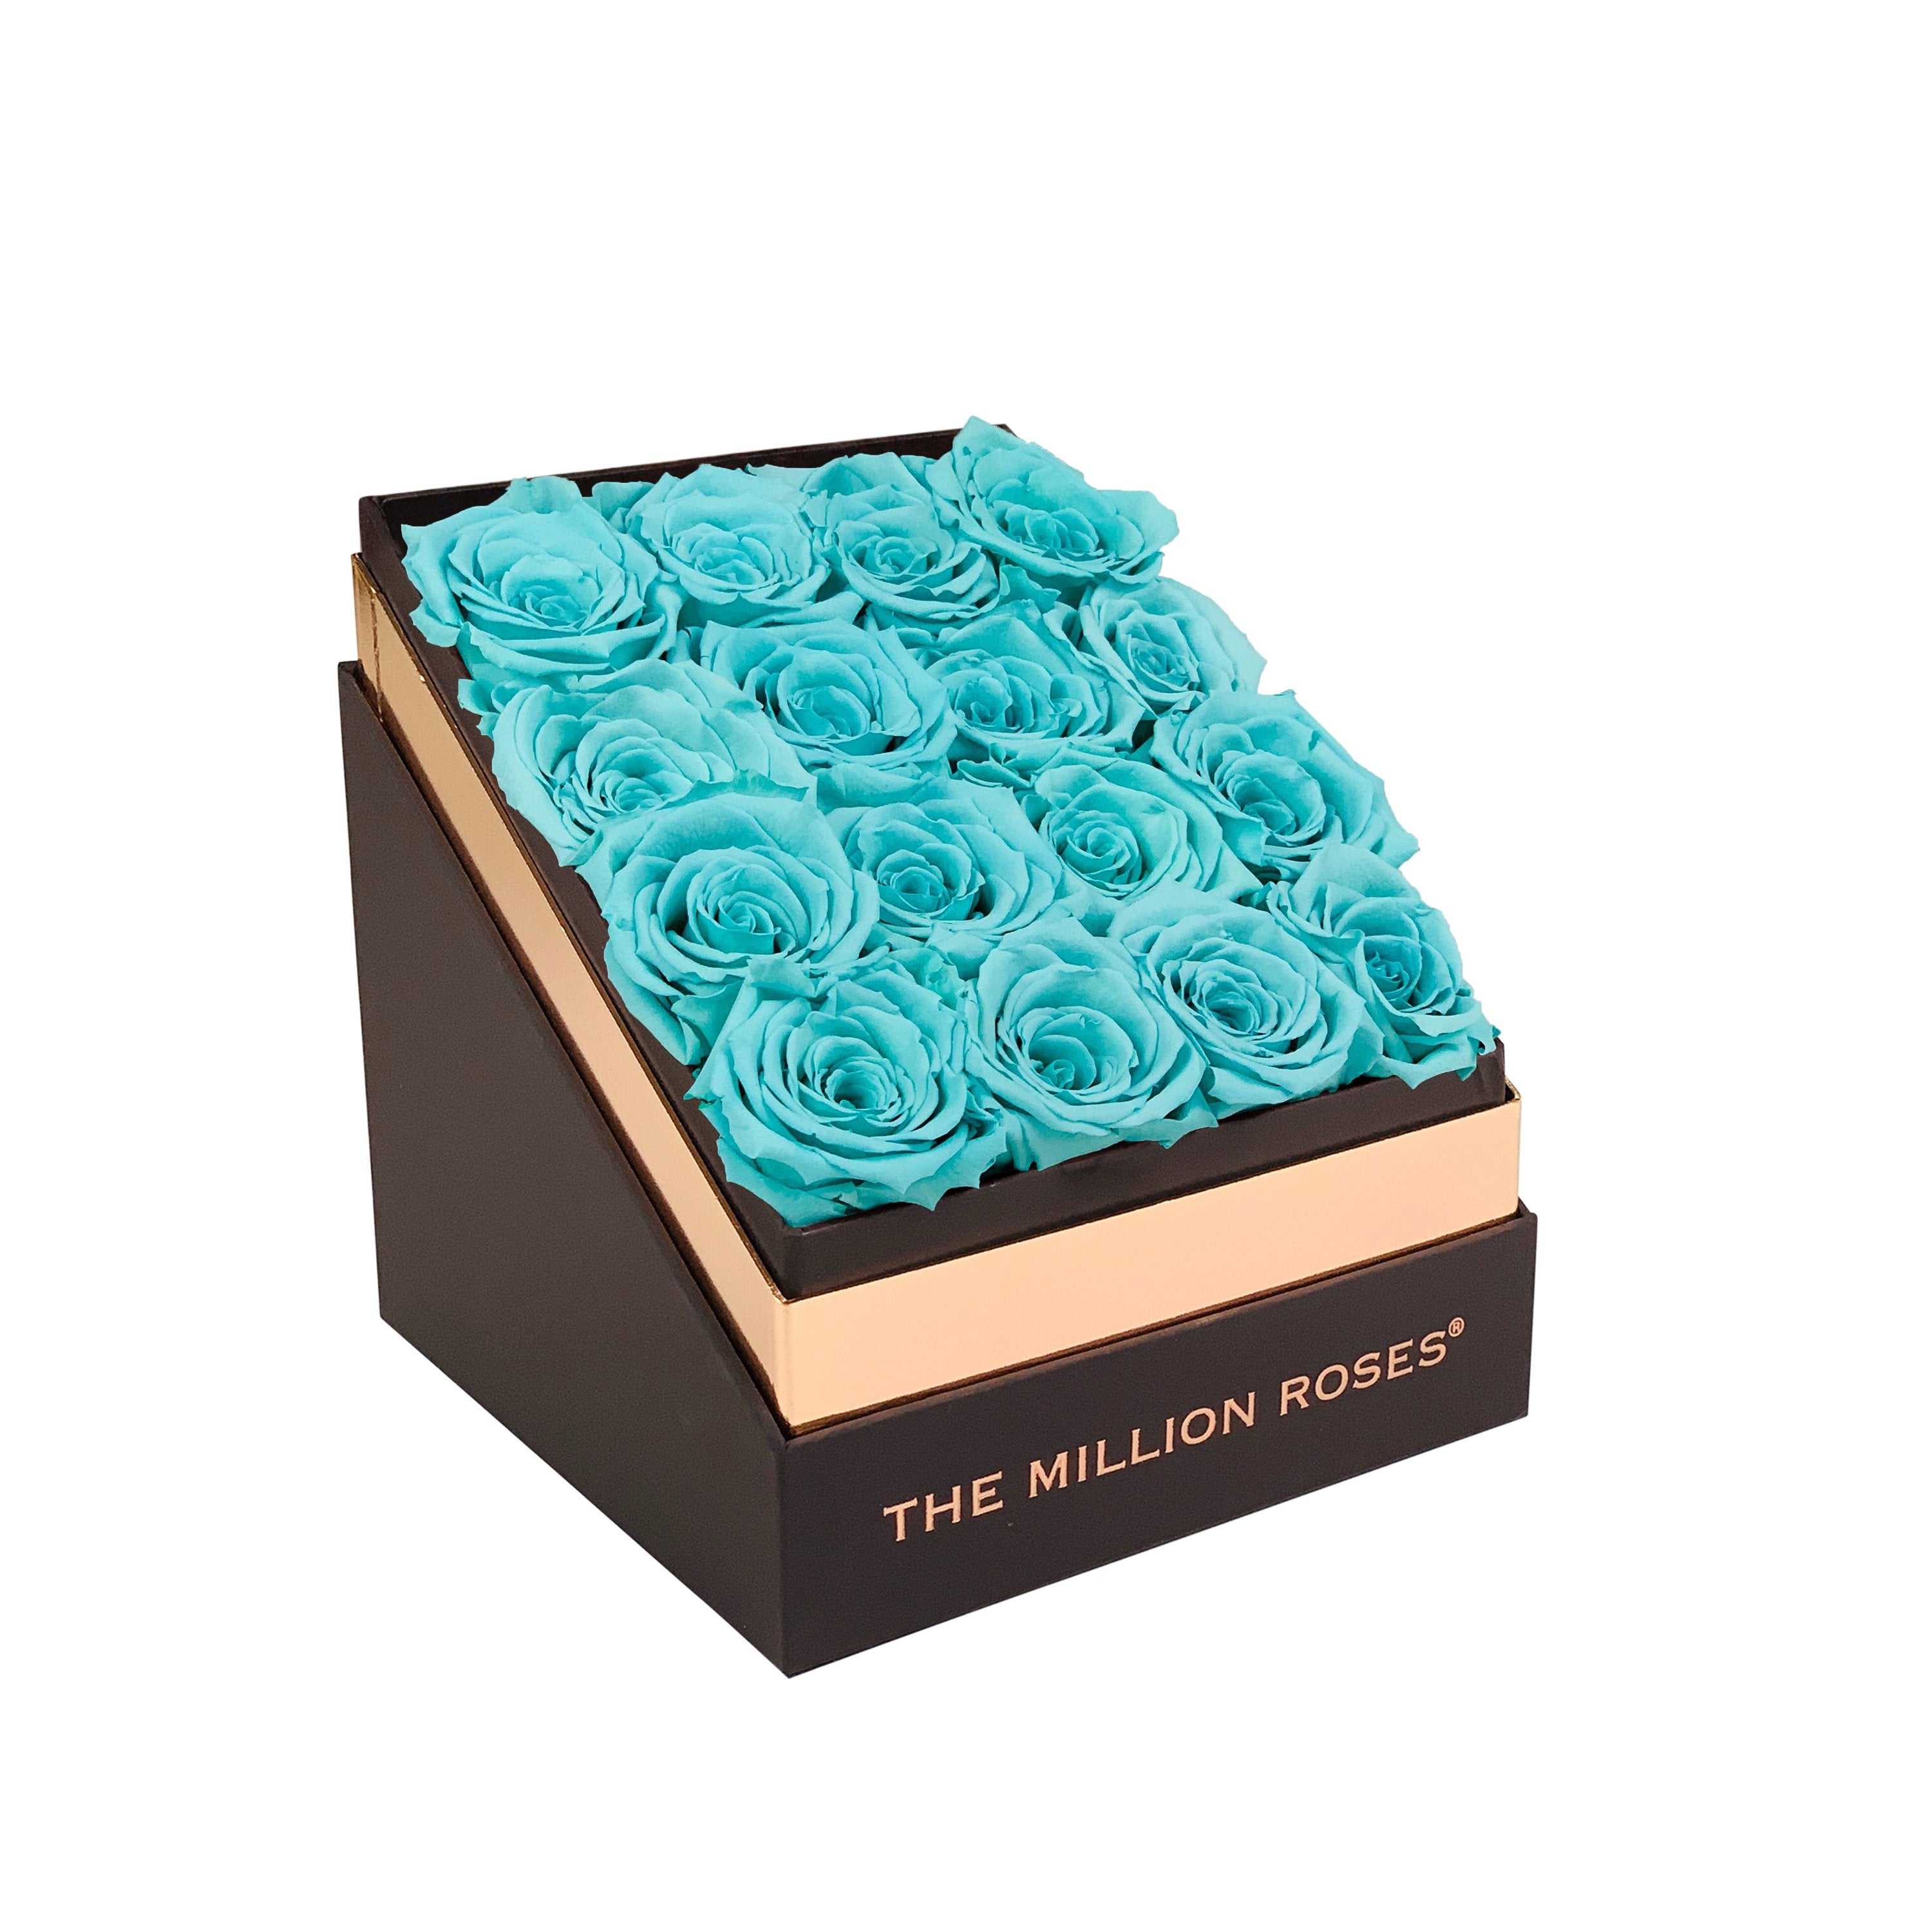 The Square - Coffee Box - Tiffany Blue Roses